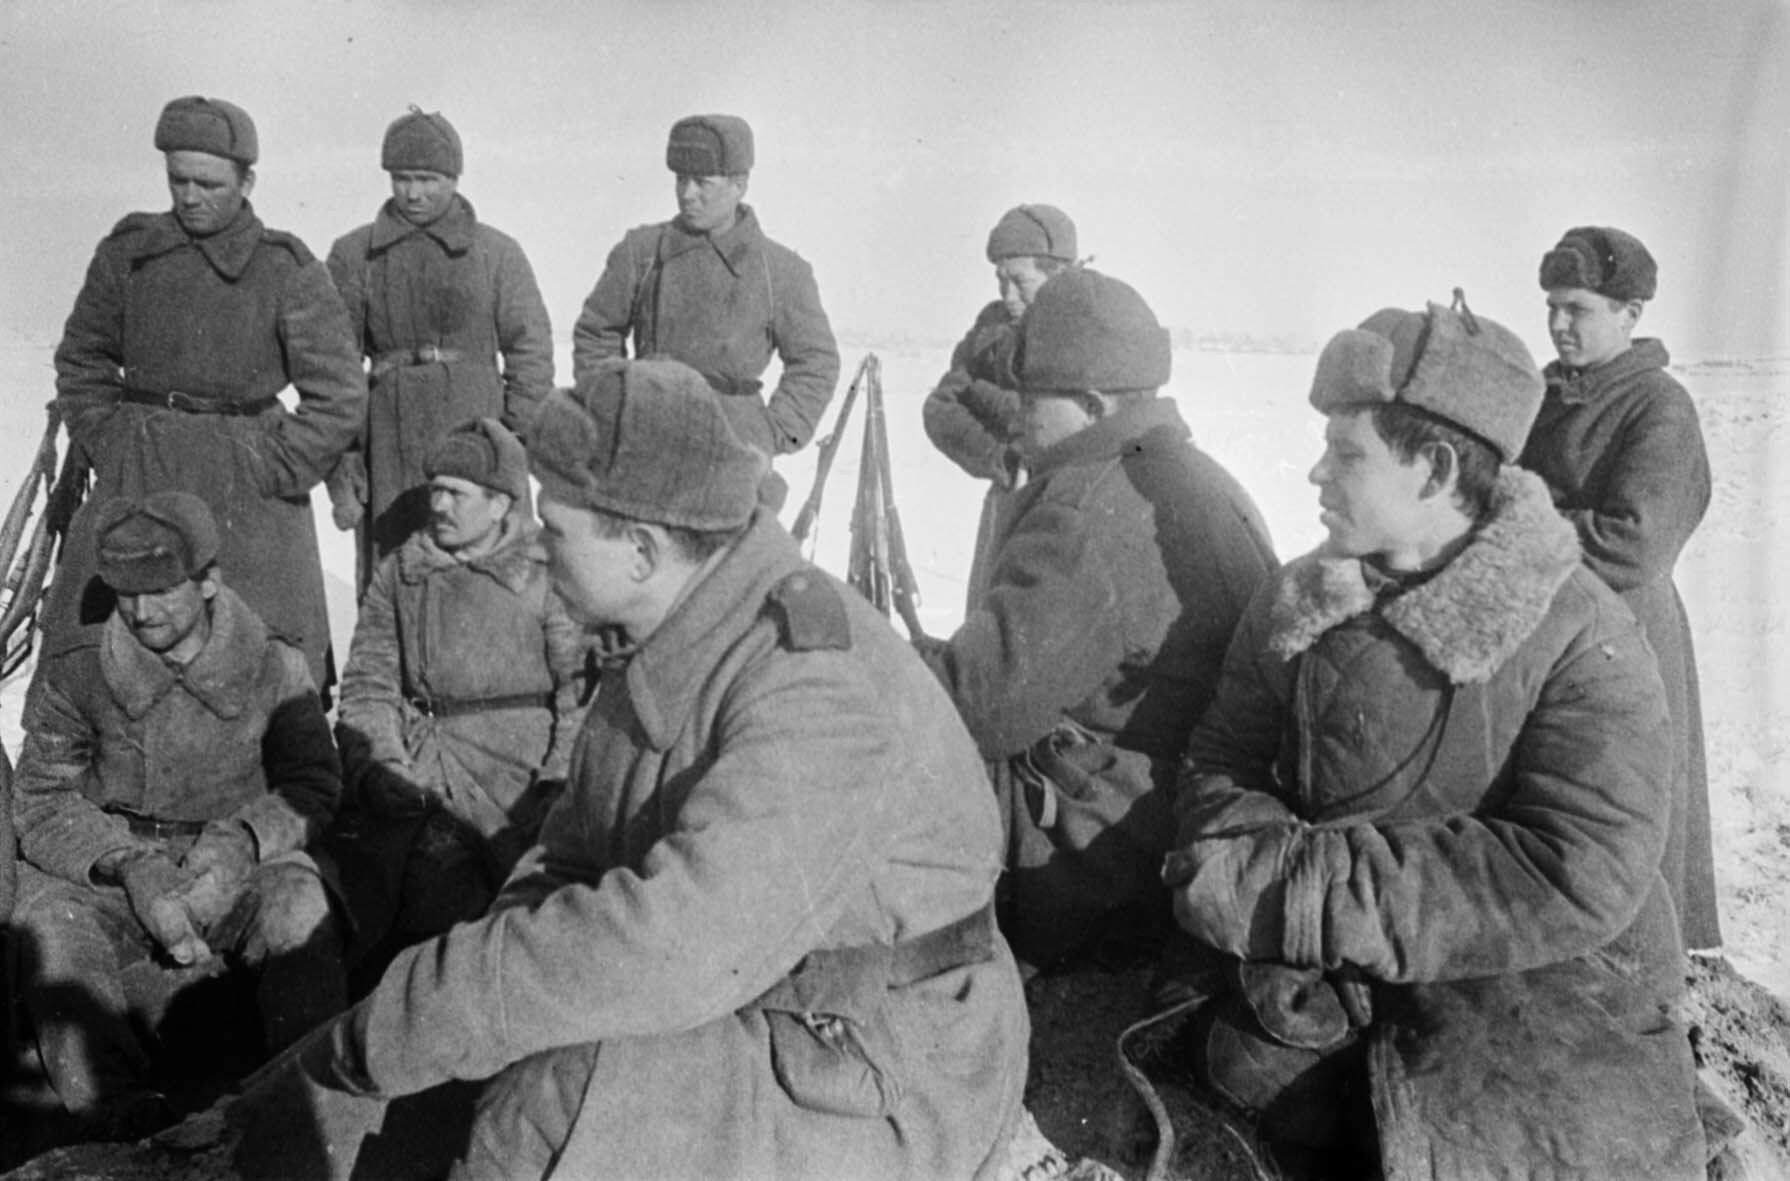 Fotografie: MG-Zug des 403. Schützenregiments, 1. Baltische Front, 27. Februar 1944 (Museum Berlin-Karlshorst RR-P)